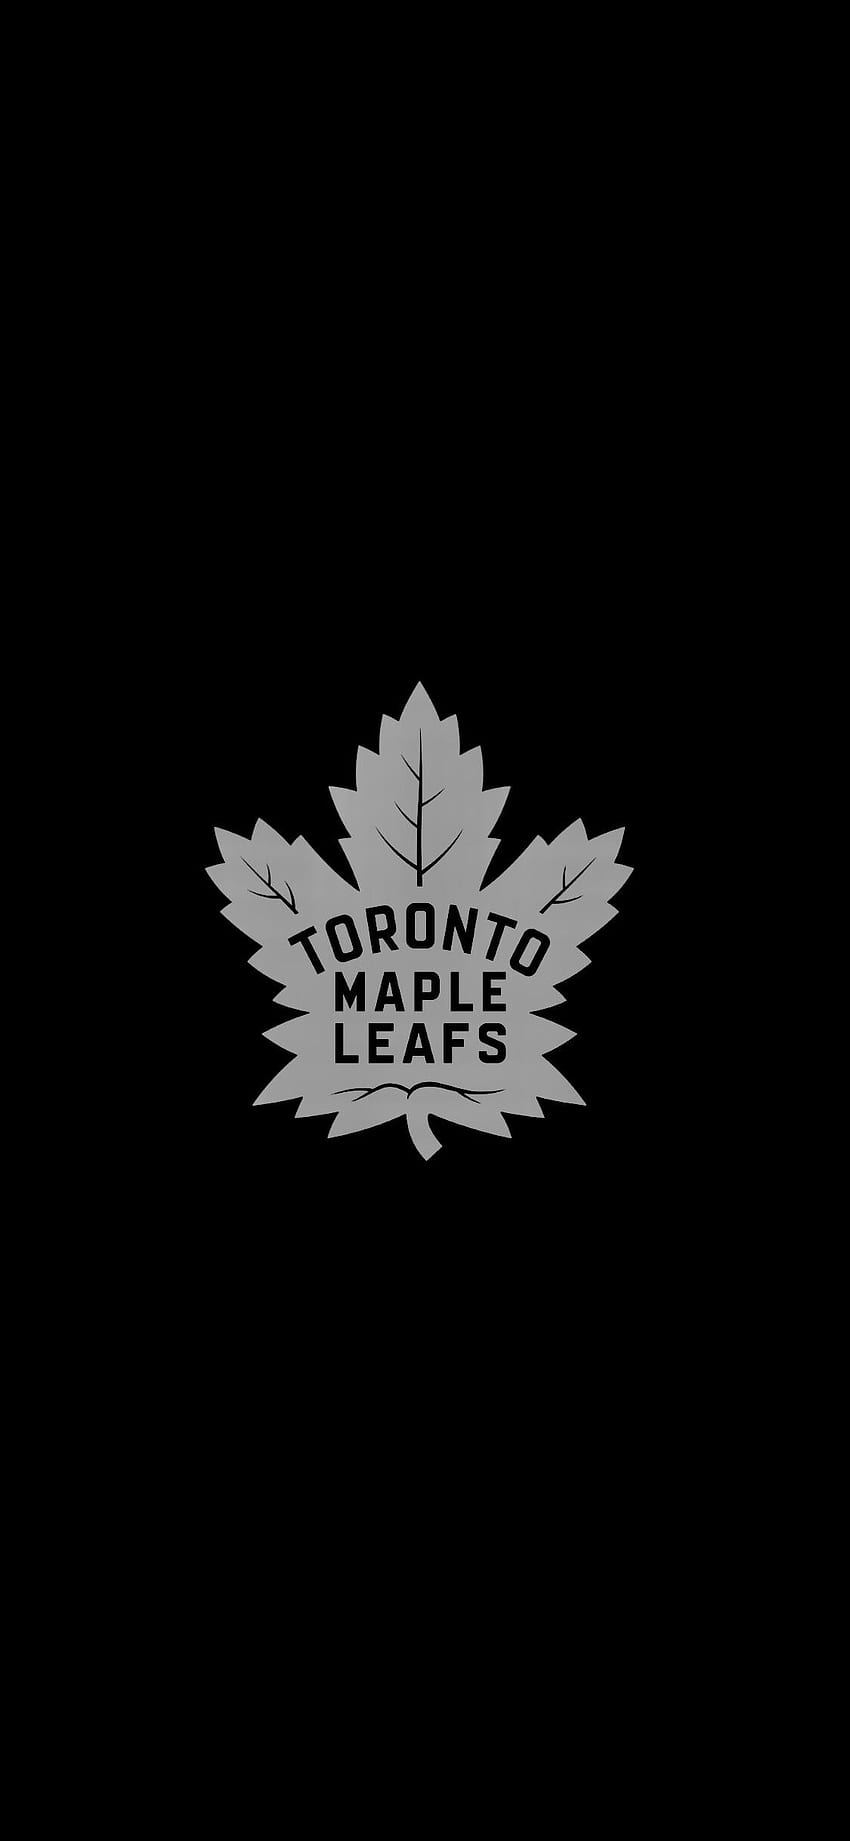 iPhone X lock screen, Toronto Maple Leafs HD phone wallpaper